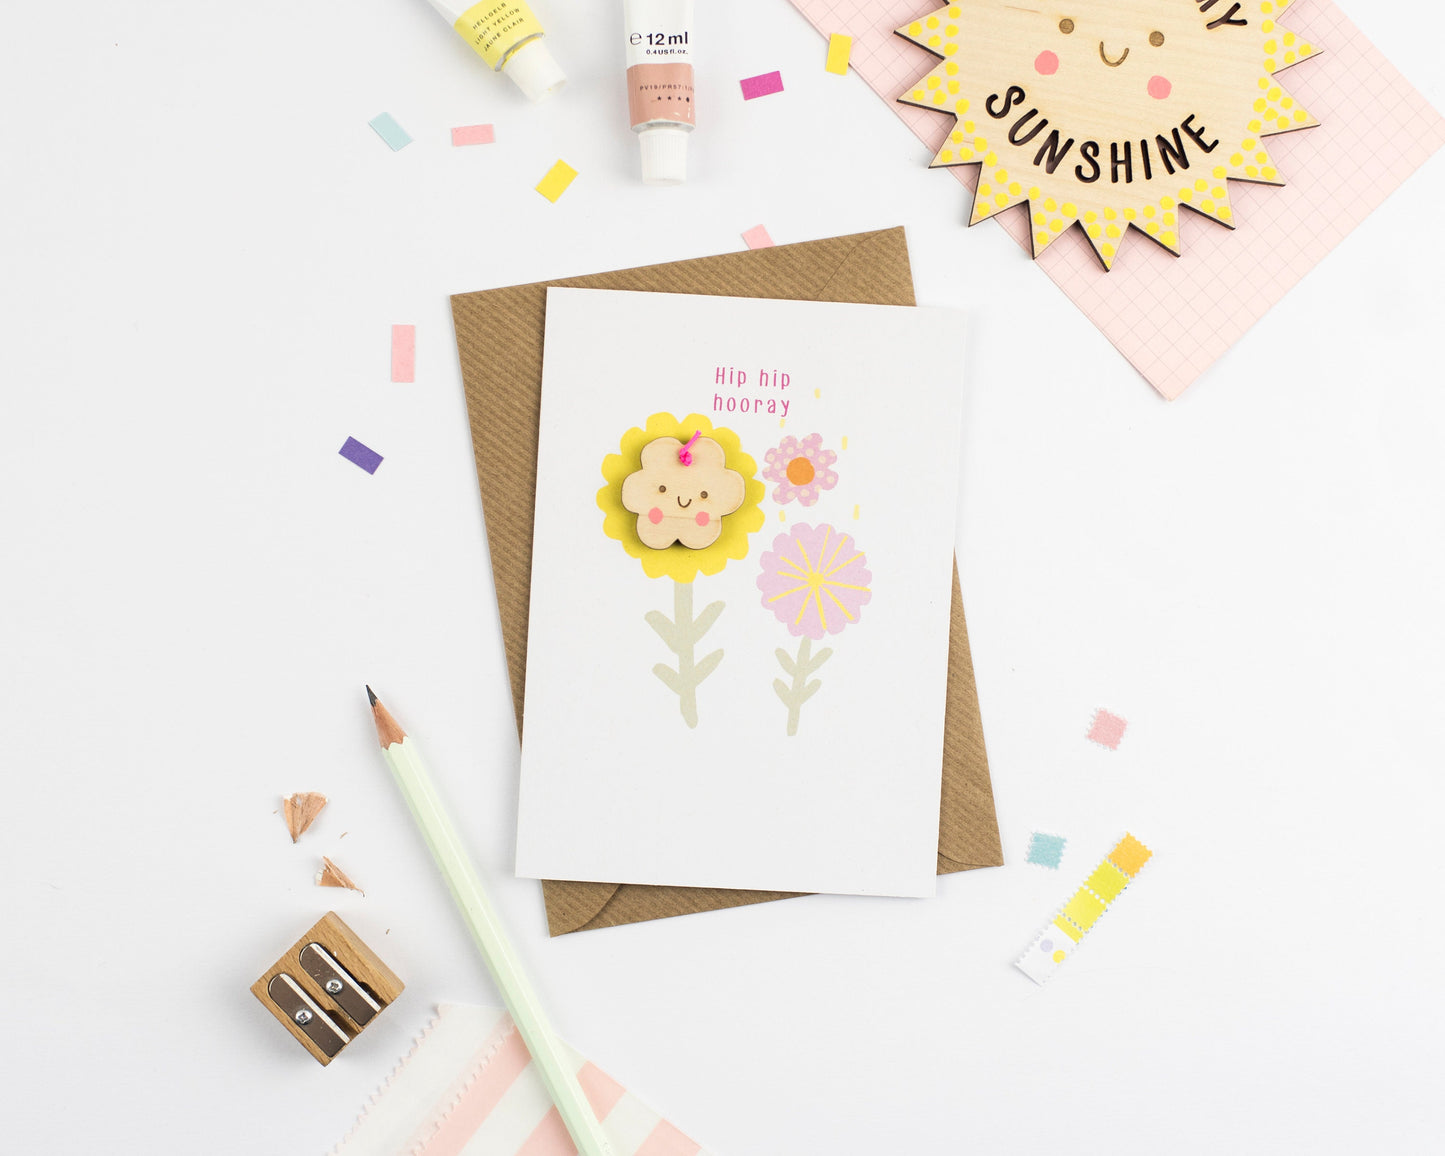 Hip hip hooray floral greeting card